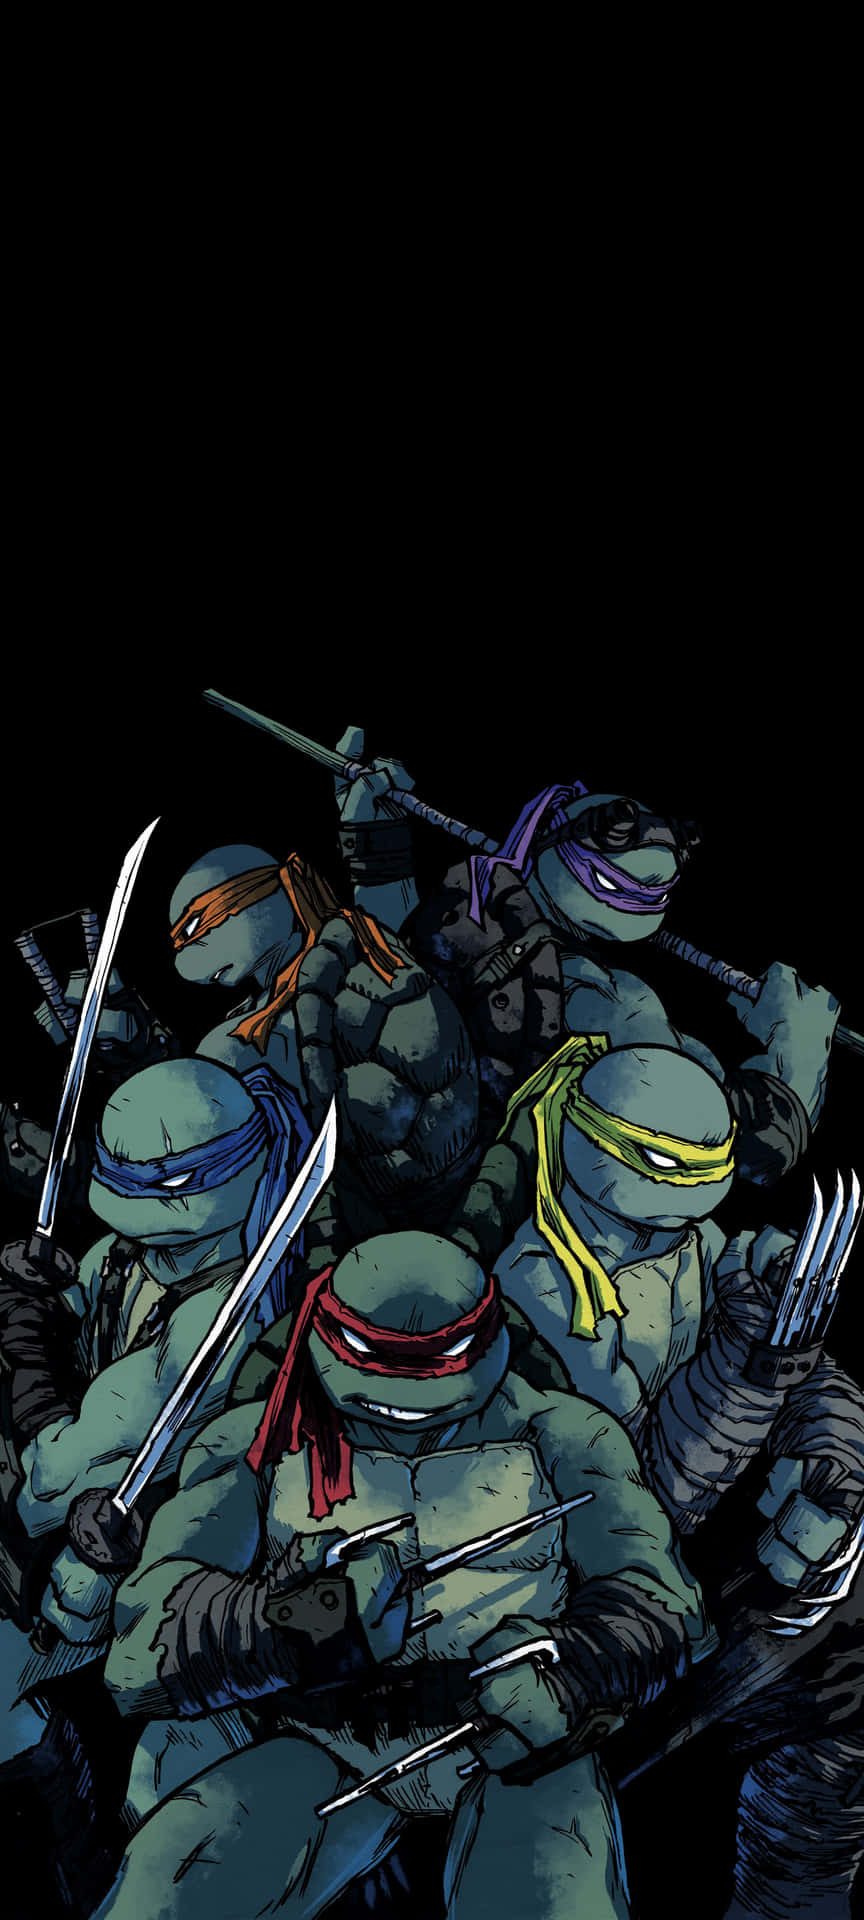 Teenage Mutant Ninja Turtles Comic Book With Jennika Wallpaper